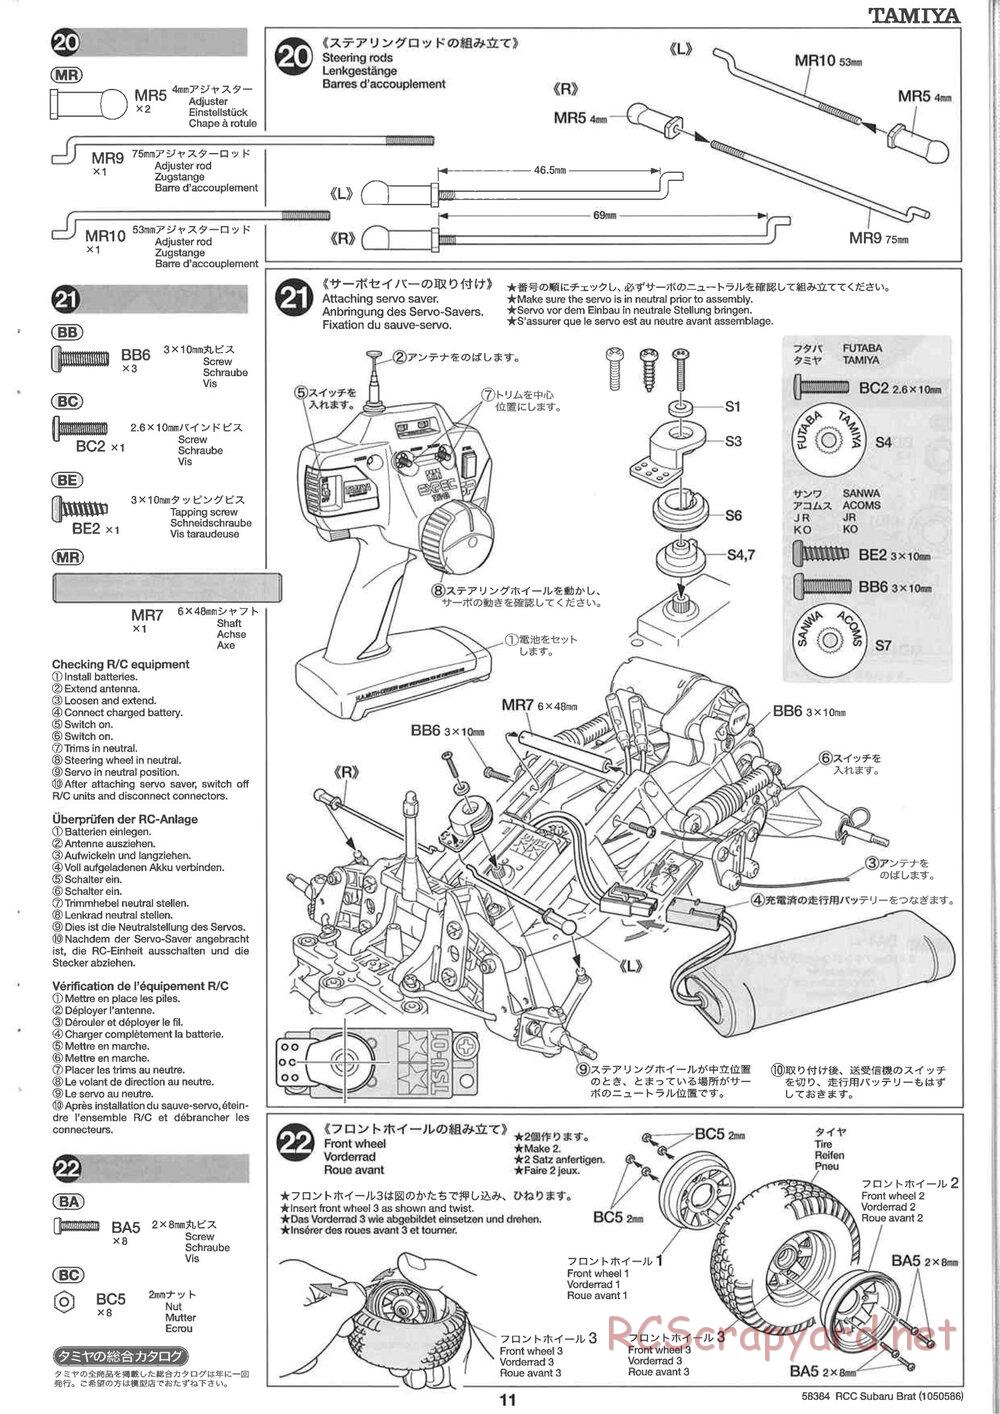 Tamiya - Subaru Brat 2007 - ORV Chassis - Manual - Page 11